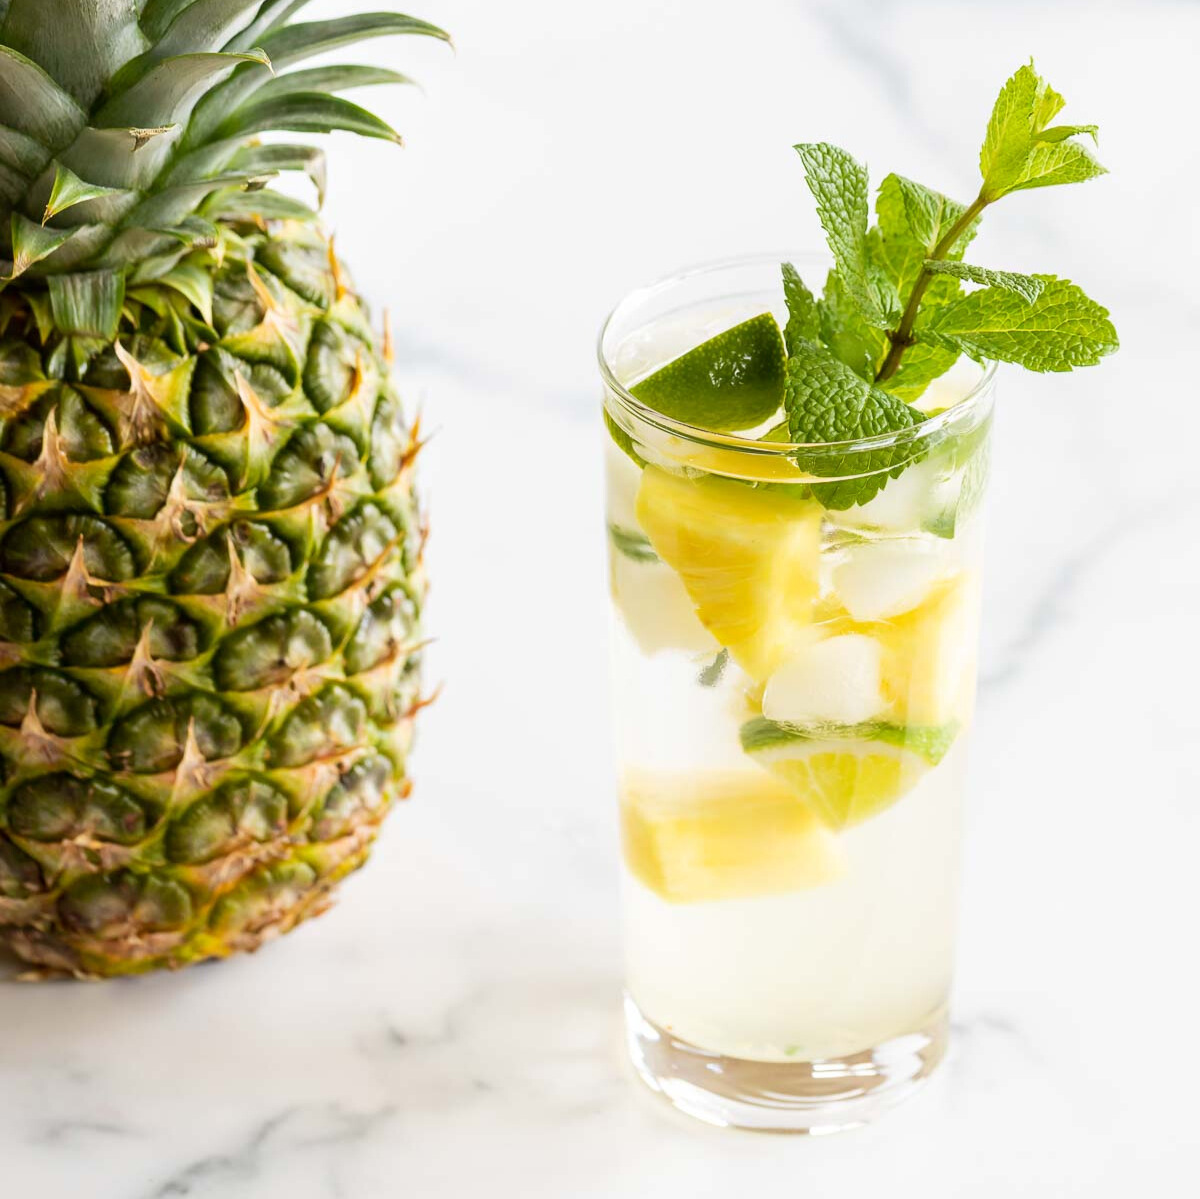 https://julieblanner.com/wp-content/uploads/2021/04/pineapple-mojito-recipe-1.jpg